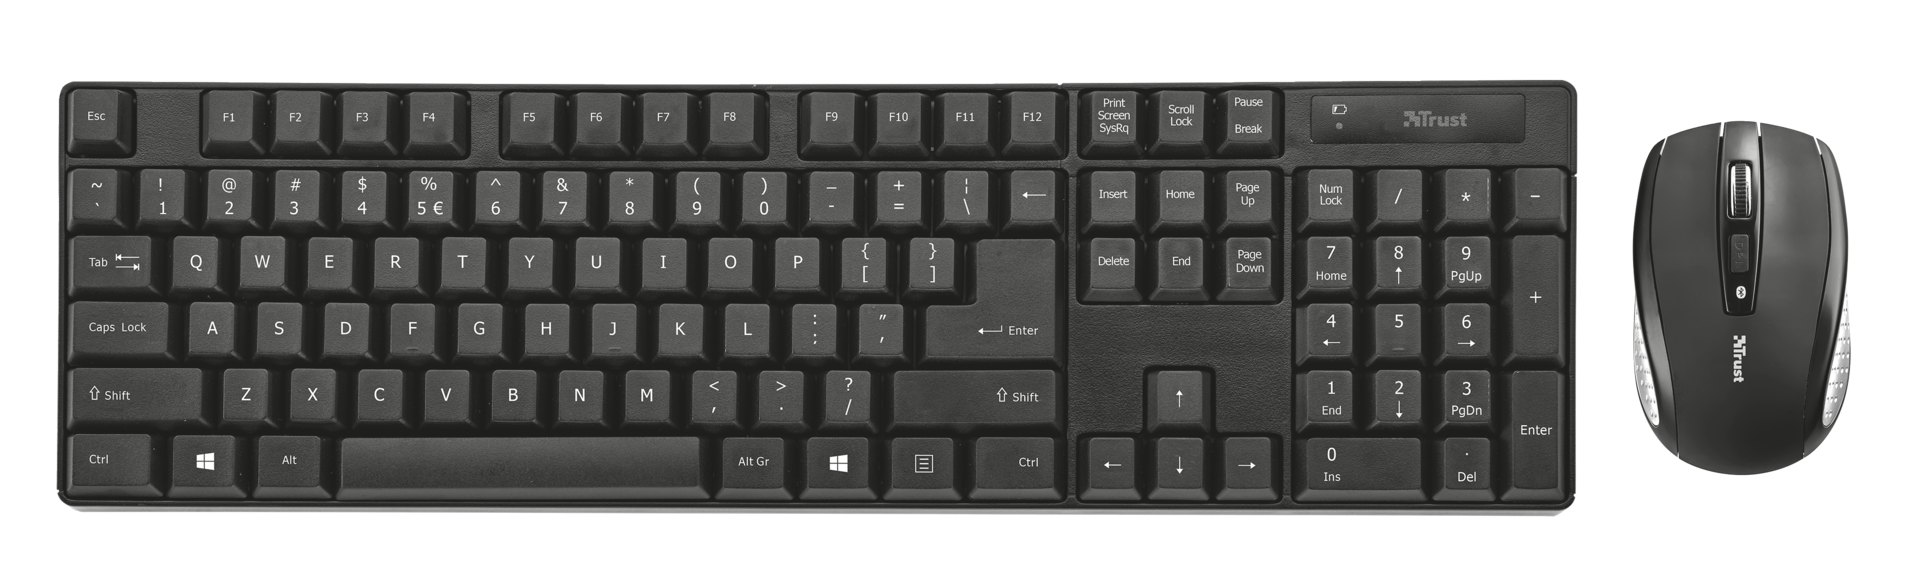 Клавиатура + мышь TRUST Ximo Wireless Keyboard в Киеве